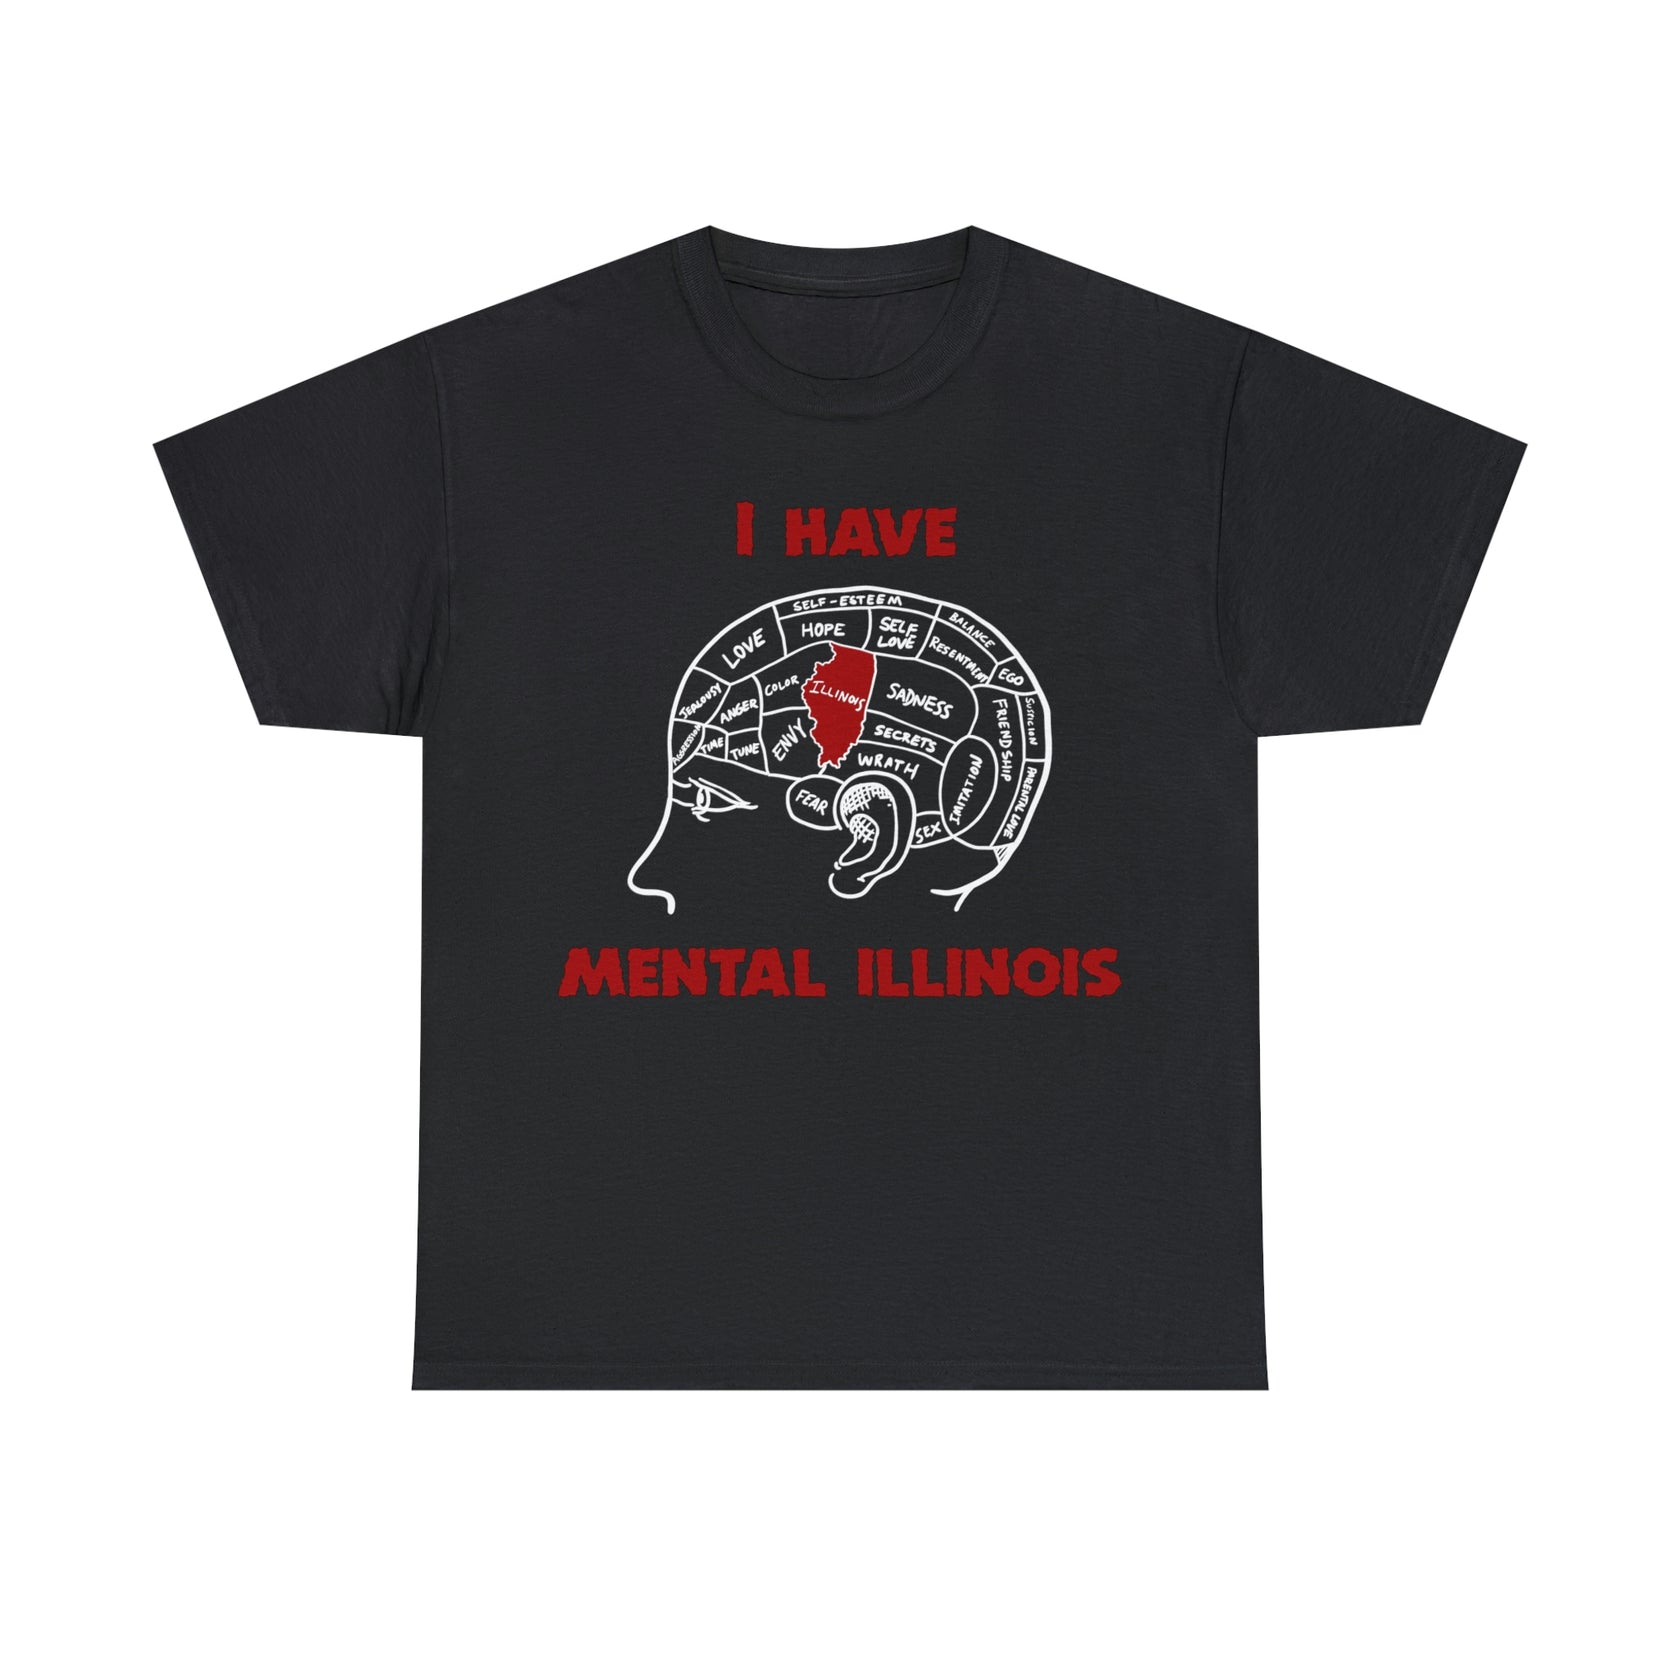 I Have Mental Illinois. – Good Shirts